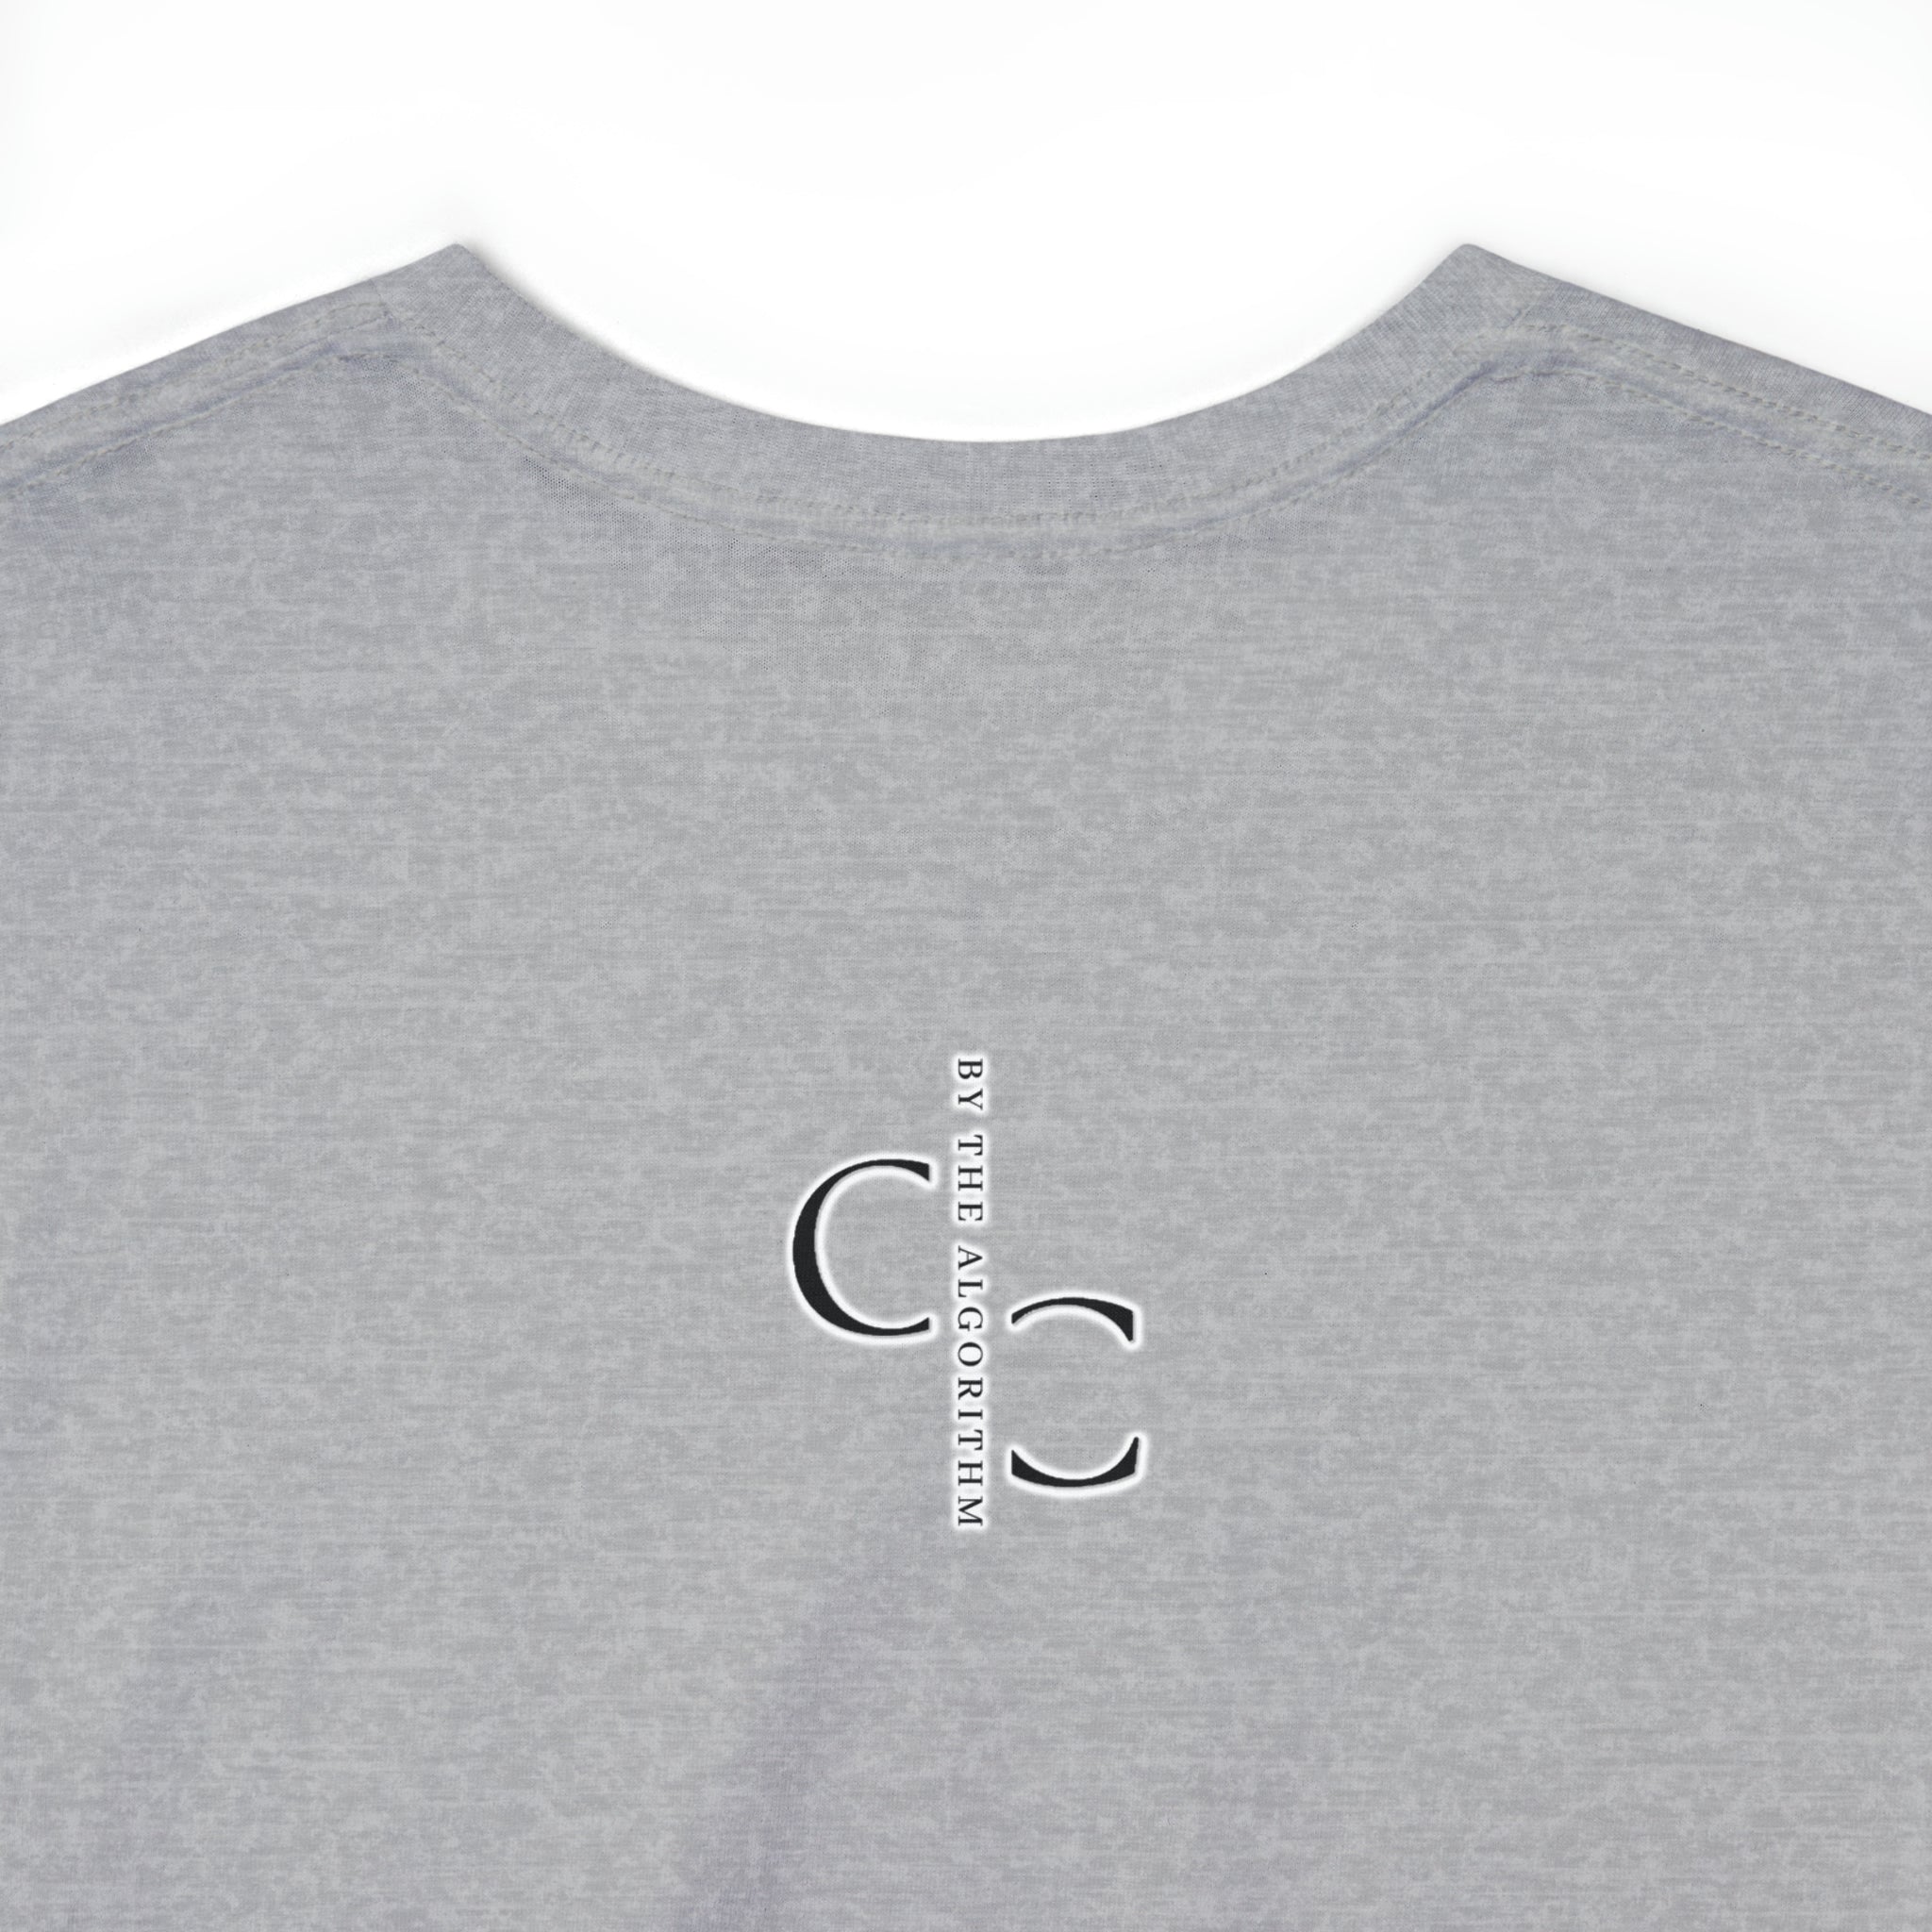 Chai T-Shirt Design by C&C